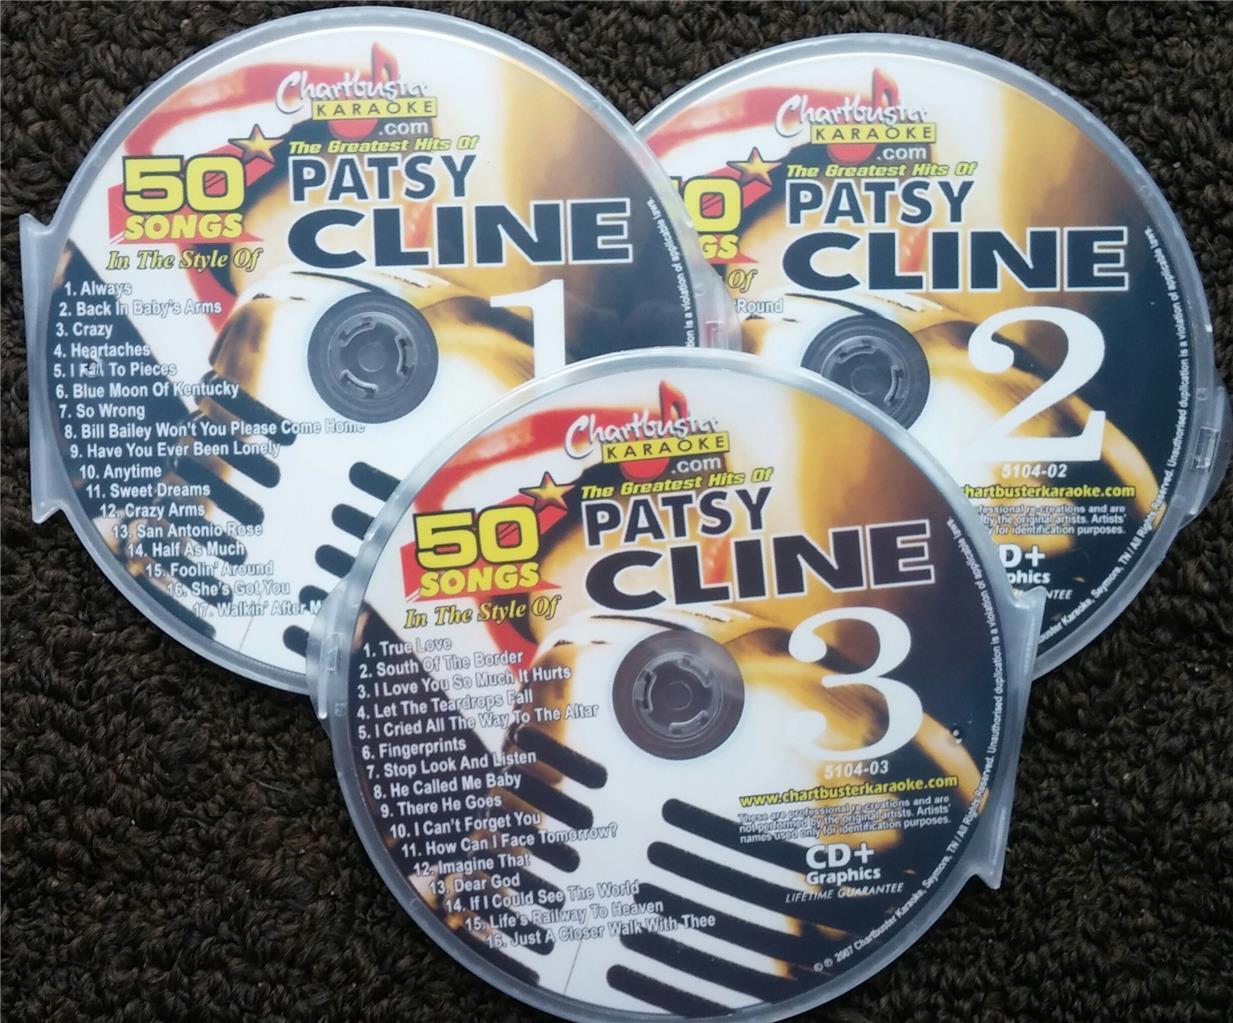 Chartbuster Karaoke Patsy Cline 3 Cd+g Set Hits Classic Country 50 Songs 5104